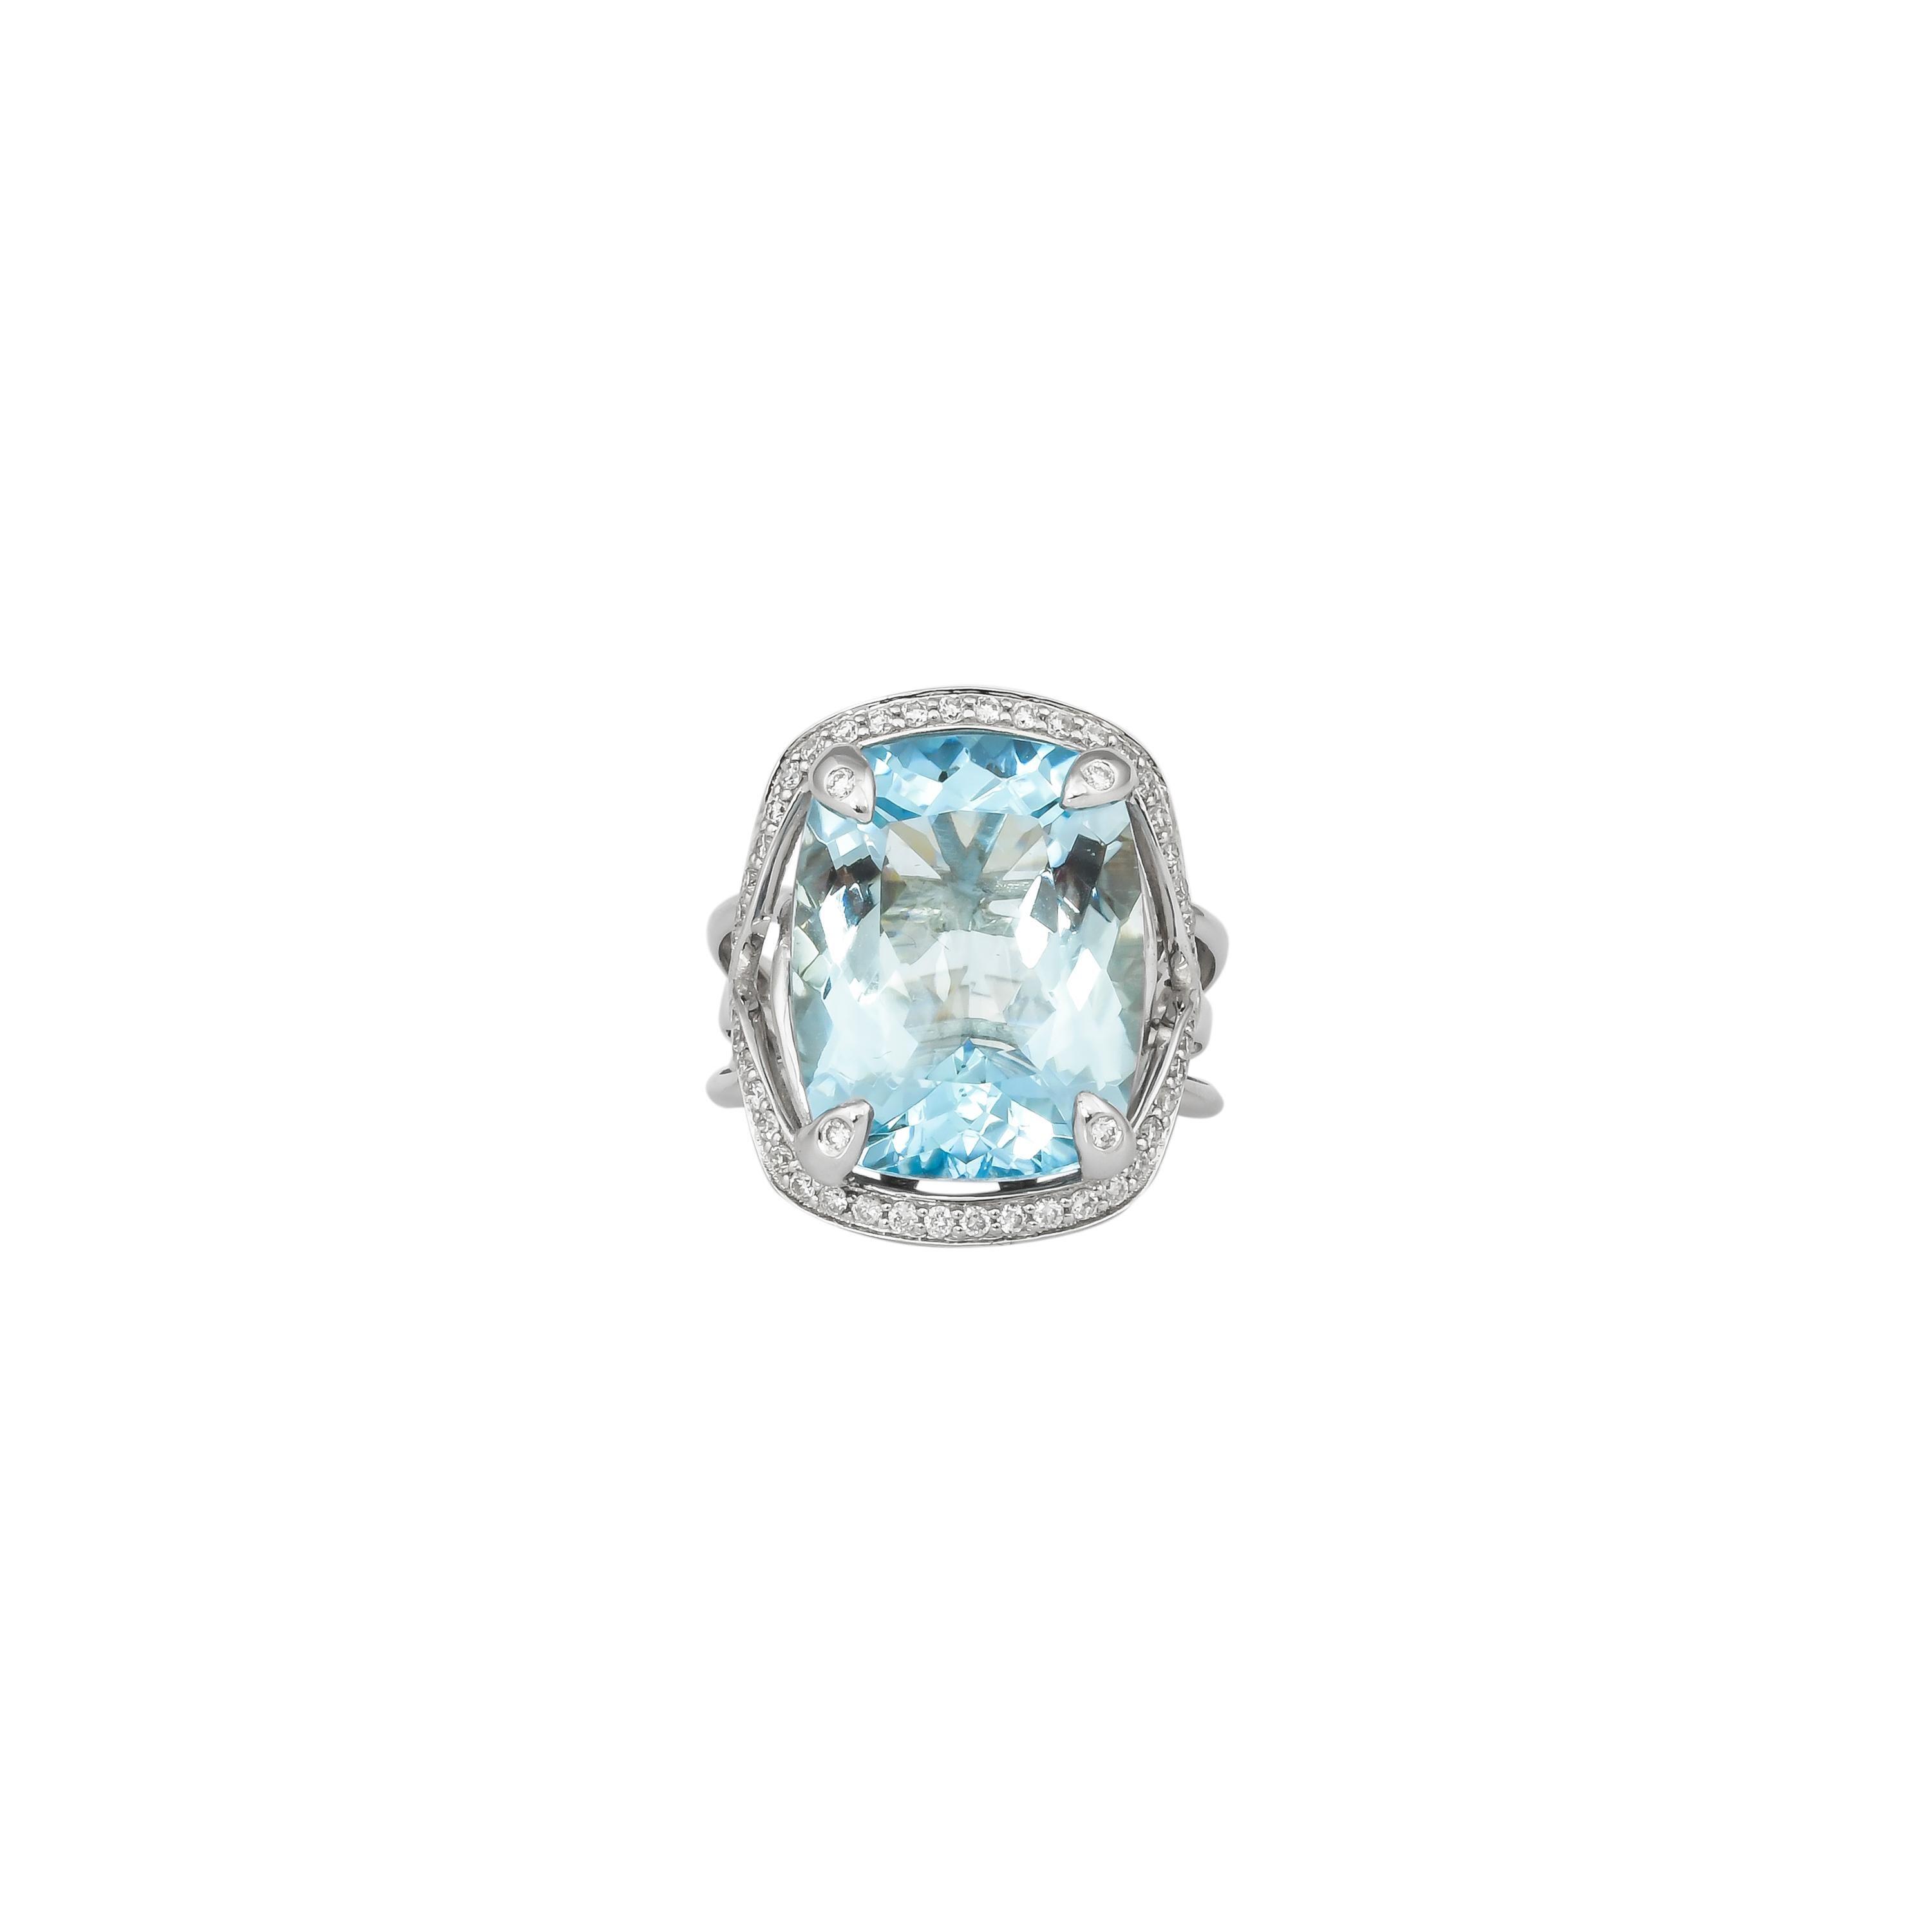 Contemporary 11.4 Carat Aquamarine and Diamond Ring in 18 Karat White Gold For Sale